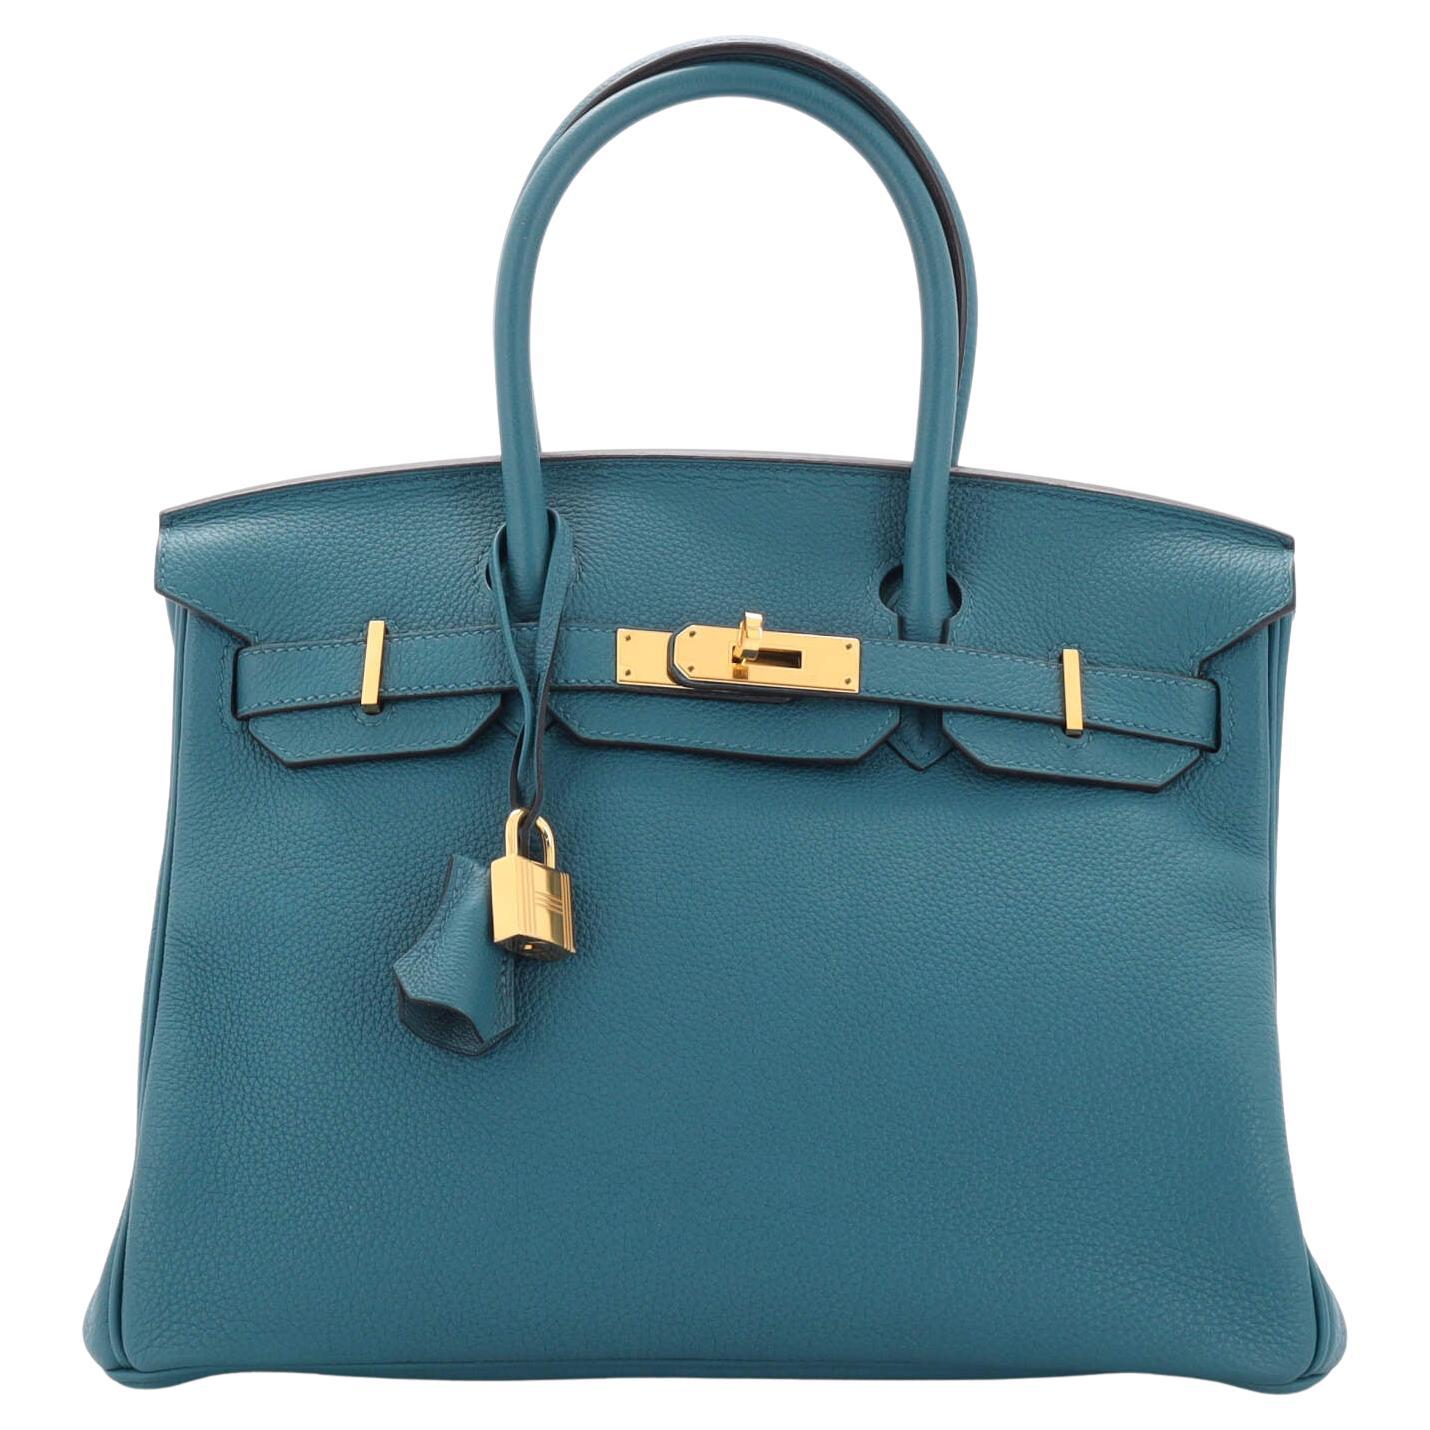 Hermes Birkin Handbag Bleu Colvert Togo with Gold Hardware 30